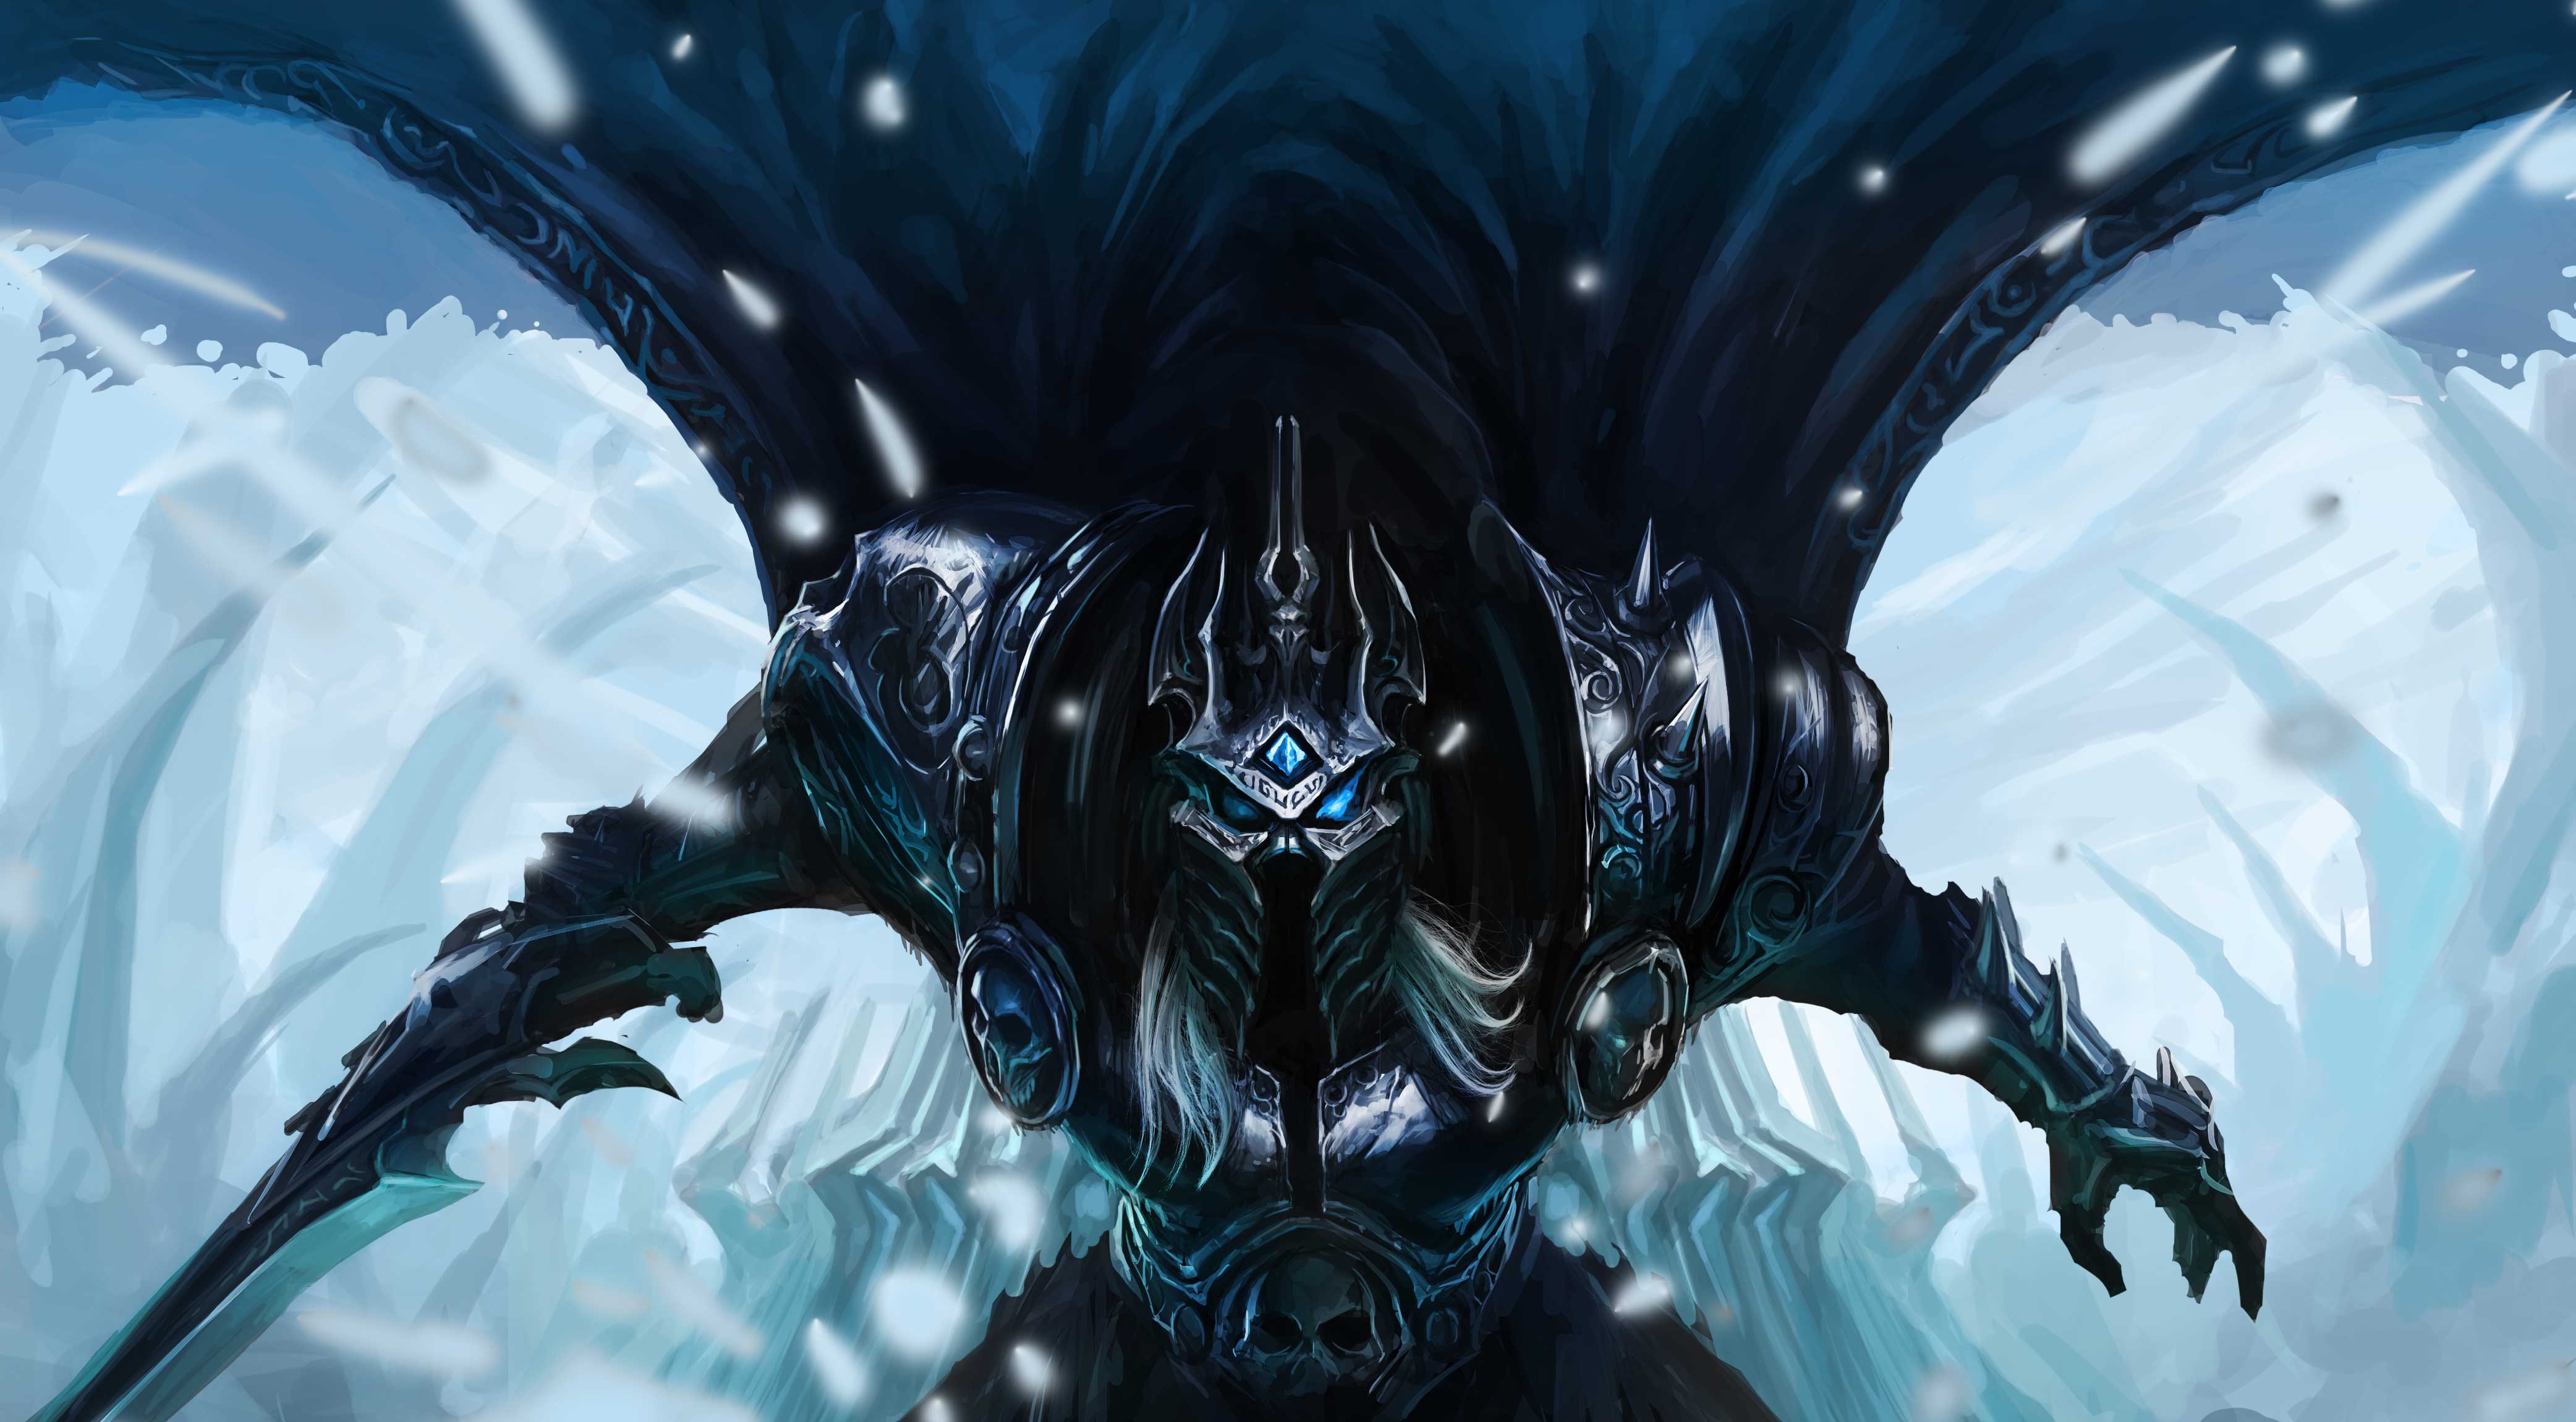 General 4167x2300 Chenbo fantasy art Lich King Warcraft World of Warcraft weapon armor sword blue eyes glowing eyes snow white hair long hair helmet crown cape Arthas Menethil